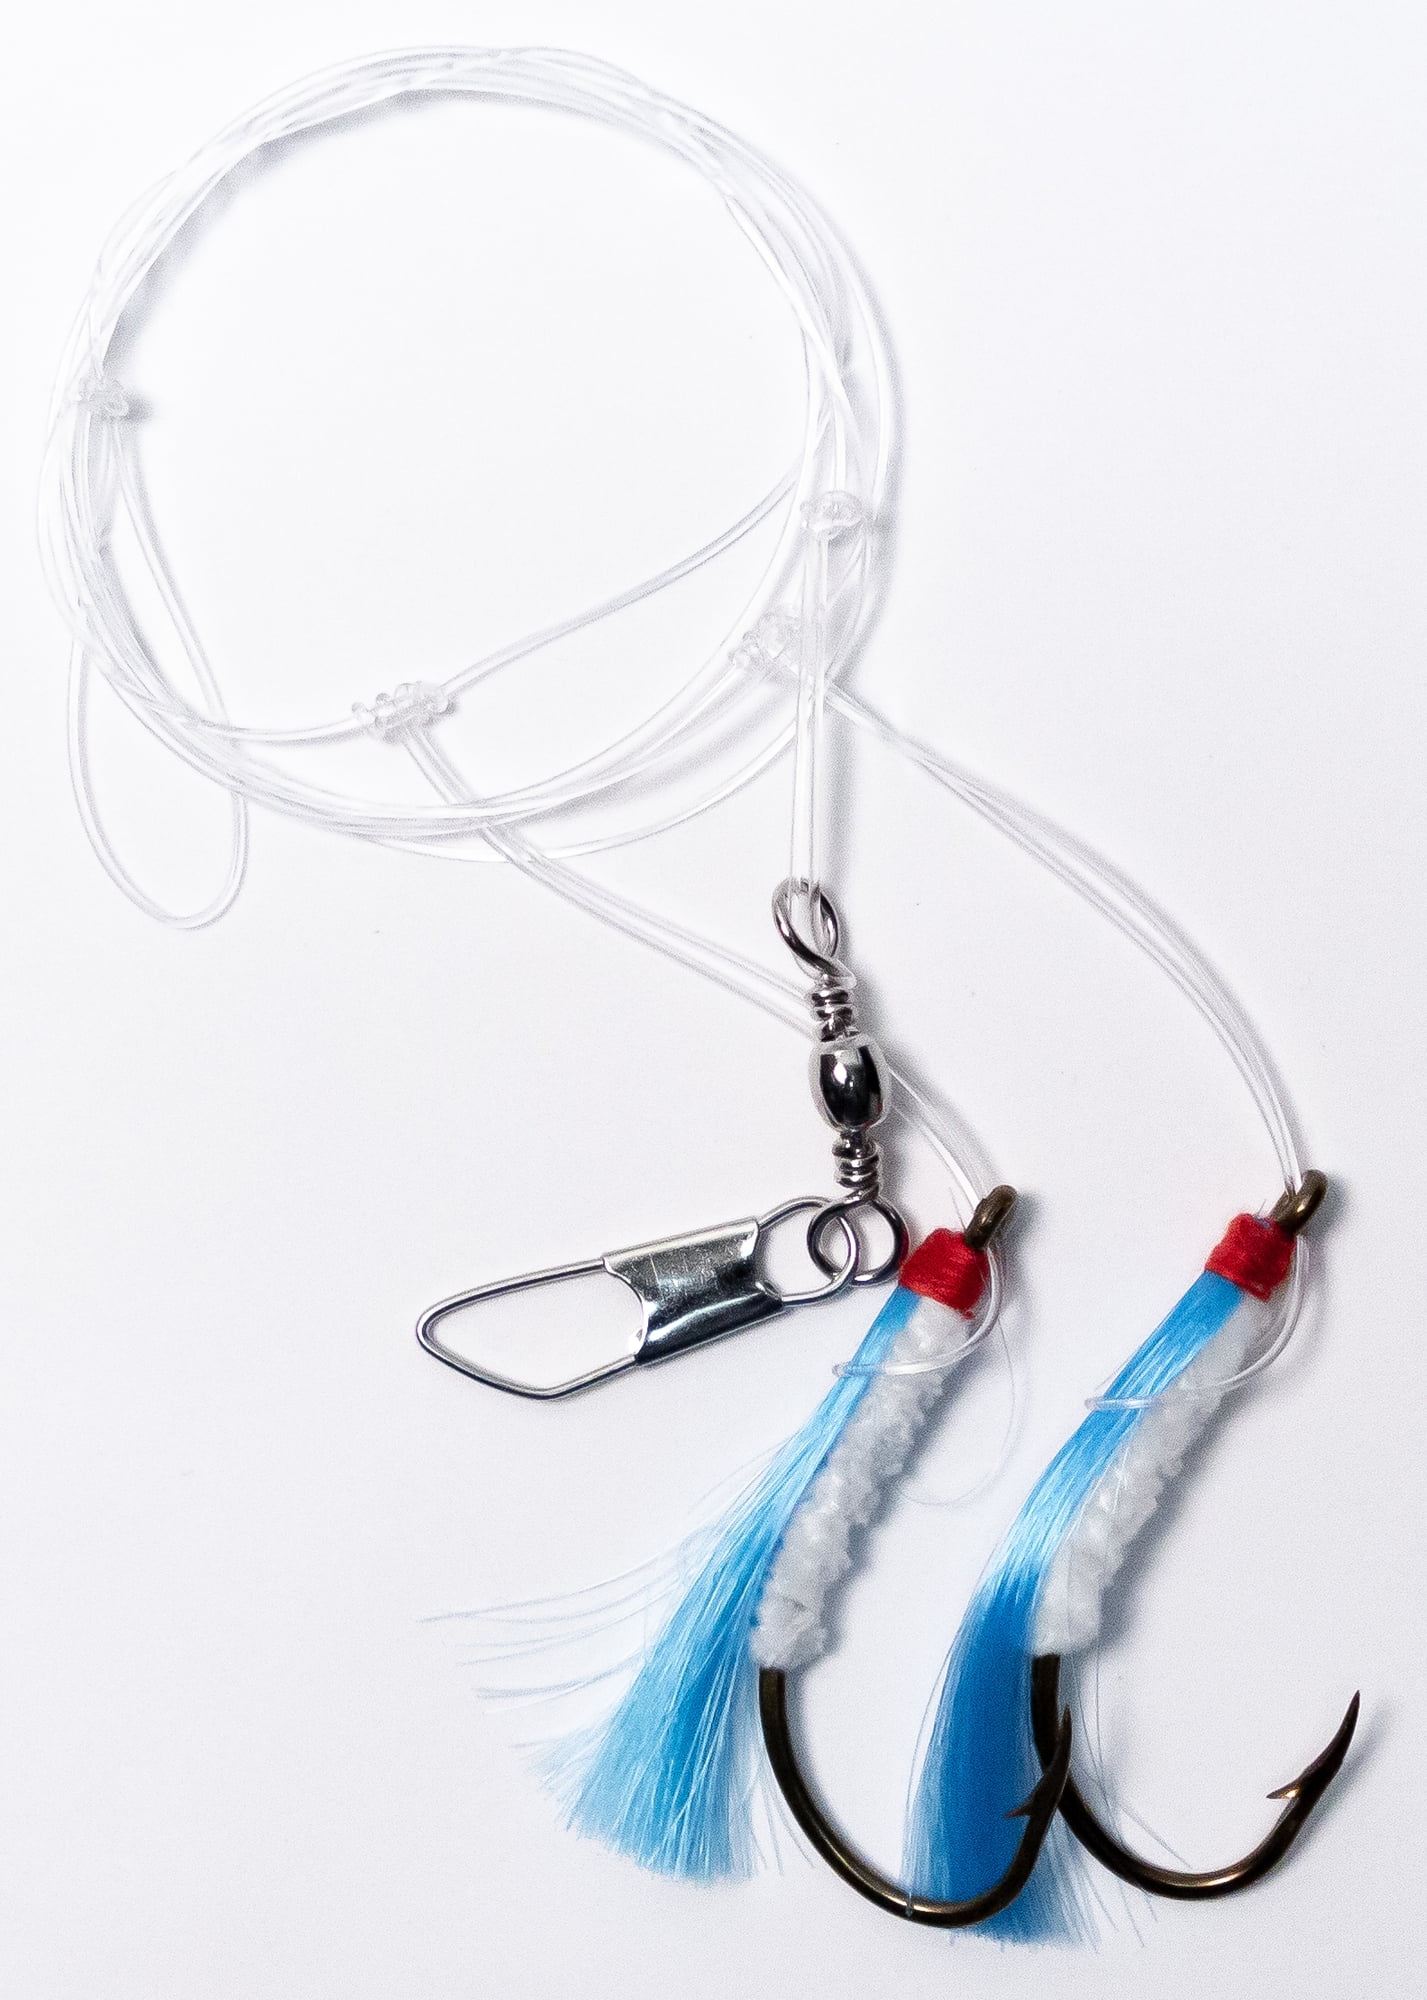 Sea Striker Double-drop Shrimp Fly Fishing Rig, Blue/White Flies